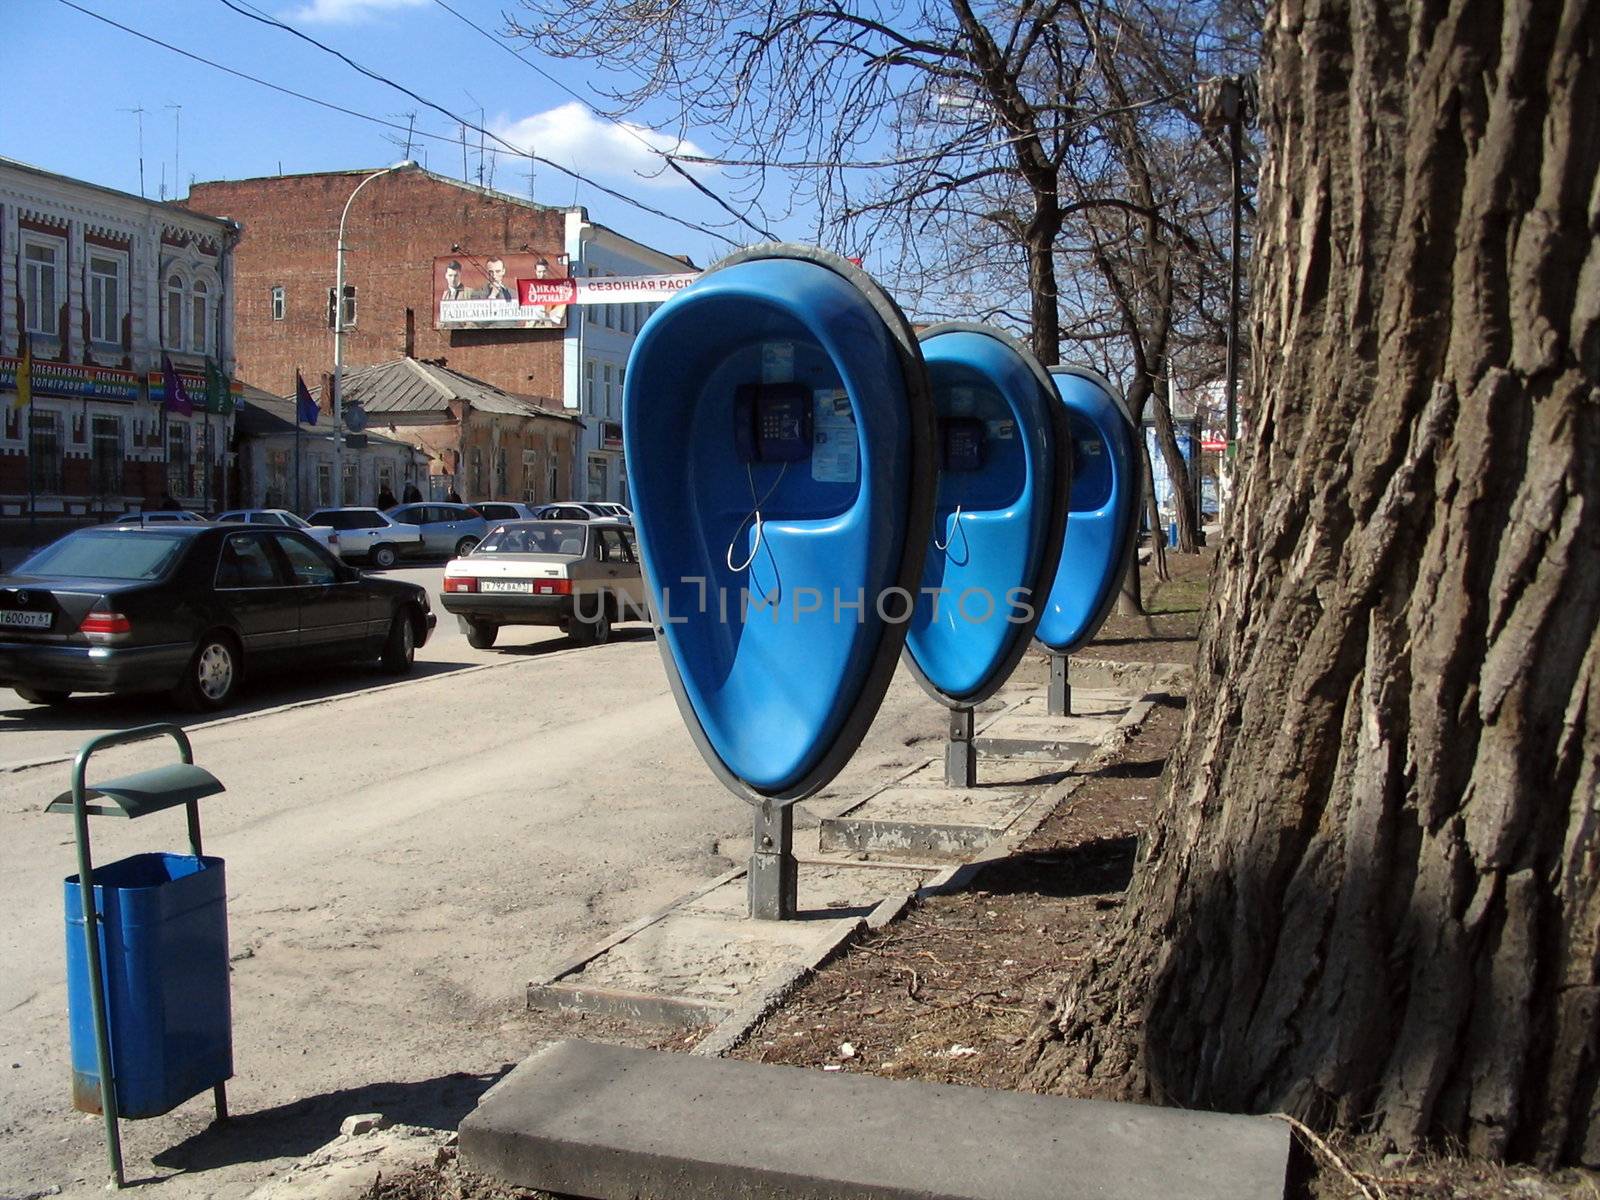 Street telephone booths